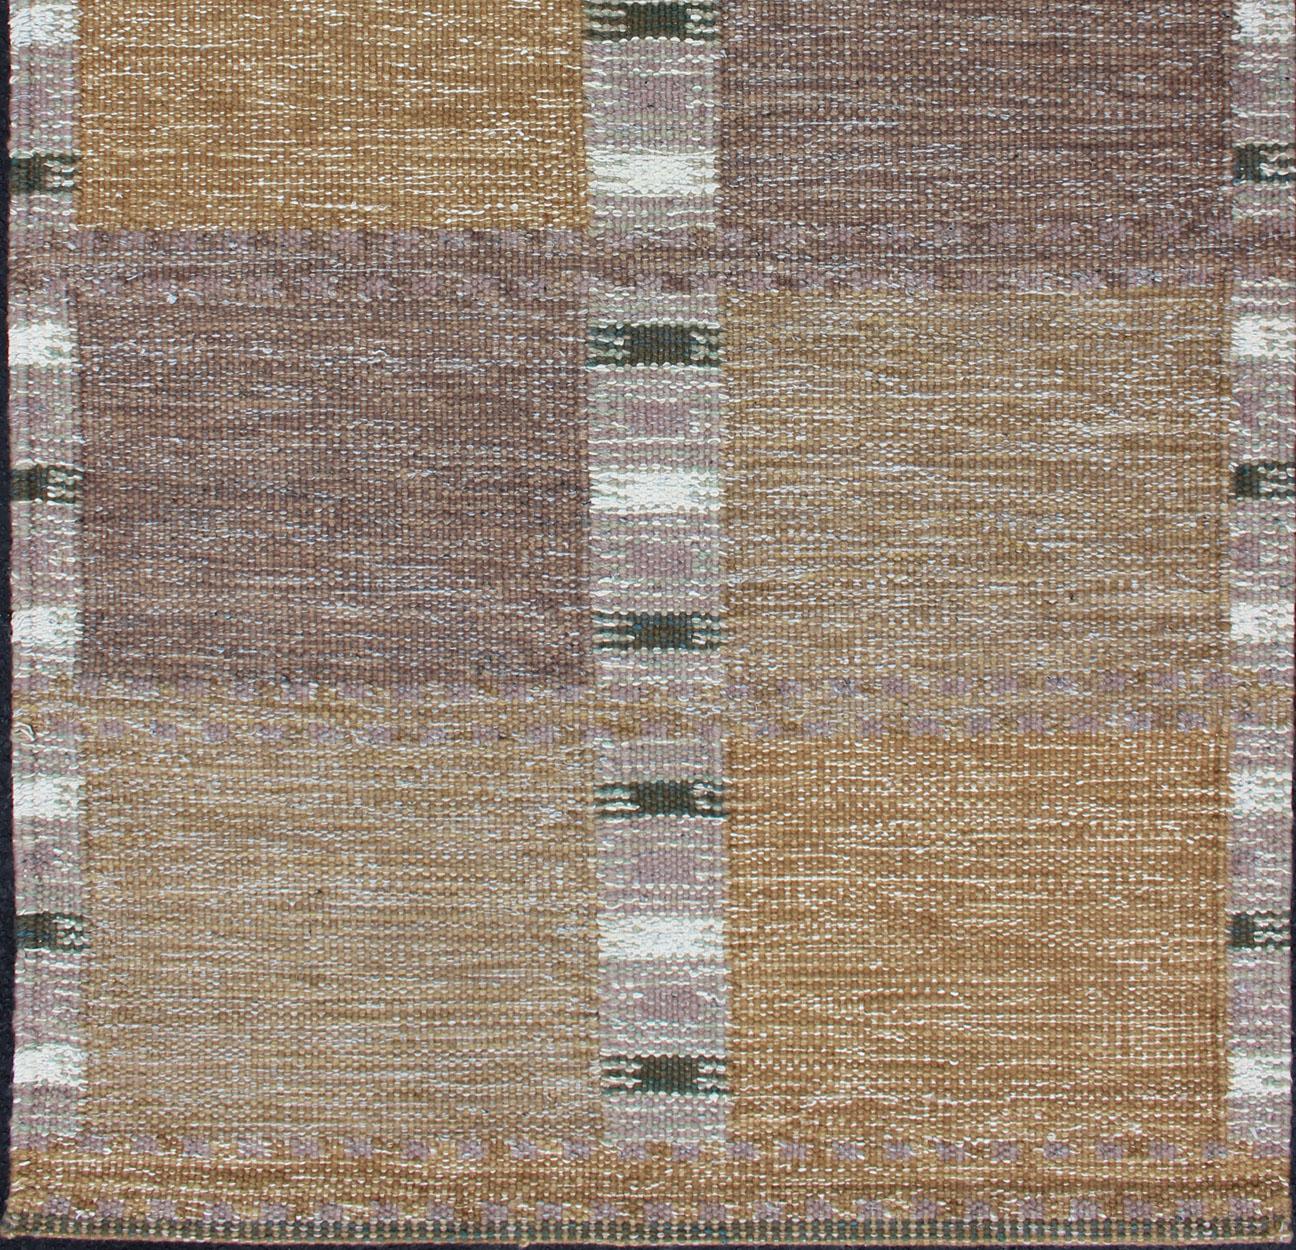 Keivan Woven Arts Contemporary Scandinavian Swedish design Kilim rug with modern design in tones of browns to tan. rug RJK-23274-SHB-022-G, country of origin / type: India / Scandinavian flat-weave.

This Scandinavian/Swedish flat-weave is inspired